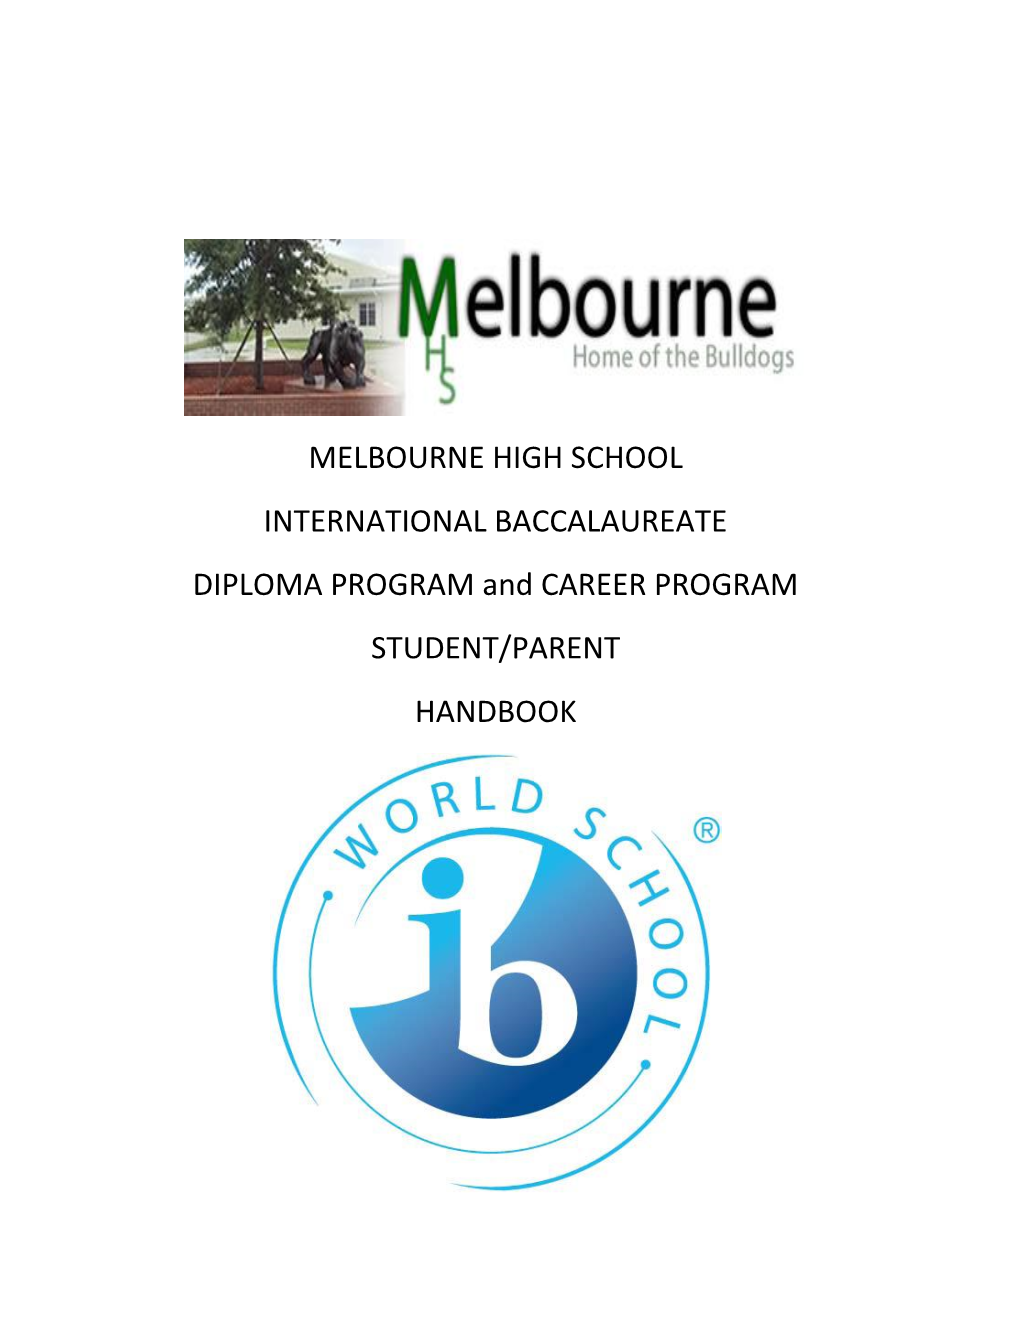 MELBOURNE HIGH SCHOOL INTERNATIONAL BACCALAUREATE DIPLOMA PROGRAM and CAREER PROGRAM STUDENT/PARENT HANDBOOK